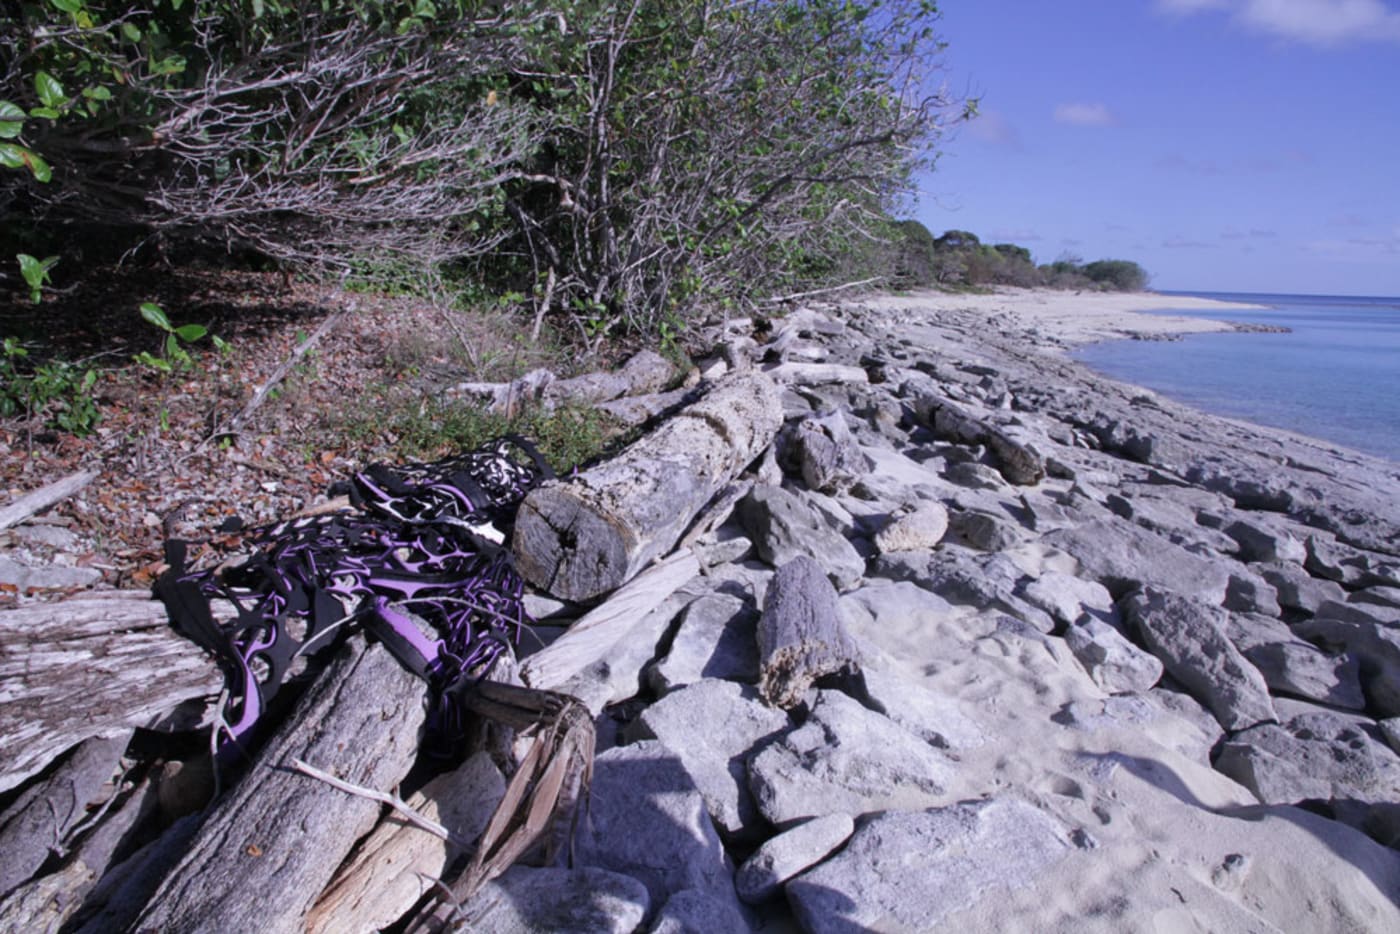 Industrial piece of rubber wedged under rocks on Milman Island